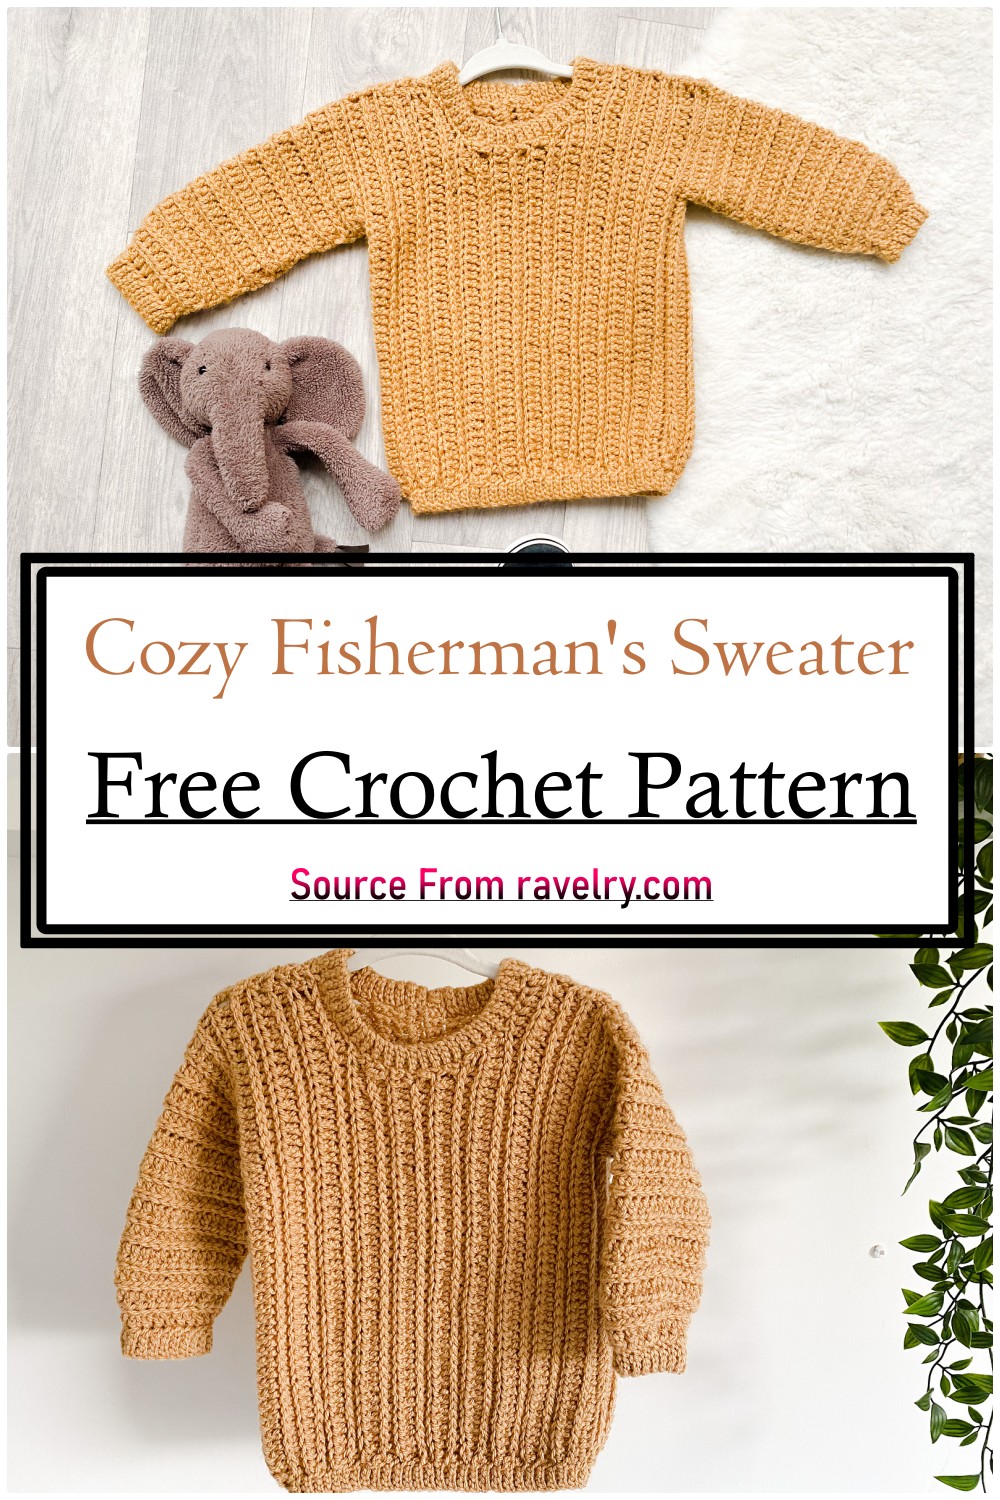 Cozy fisherman's sweater